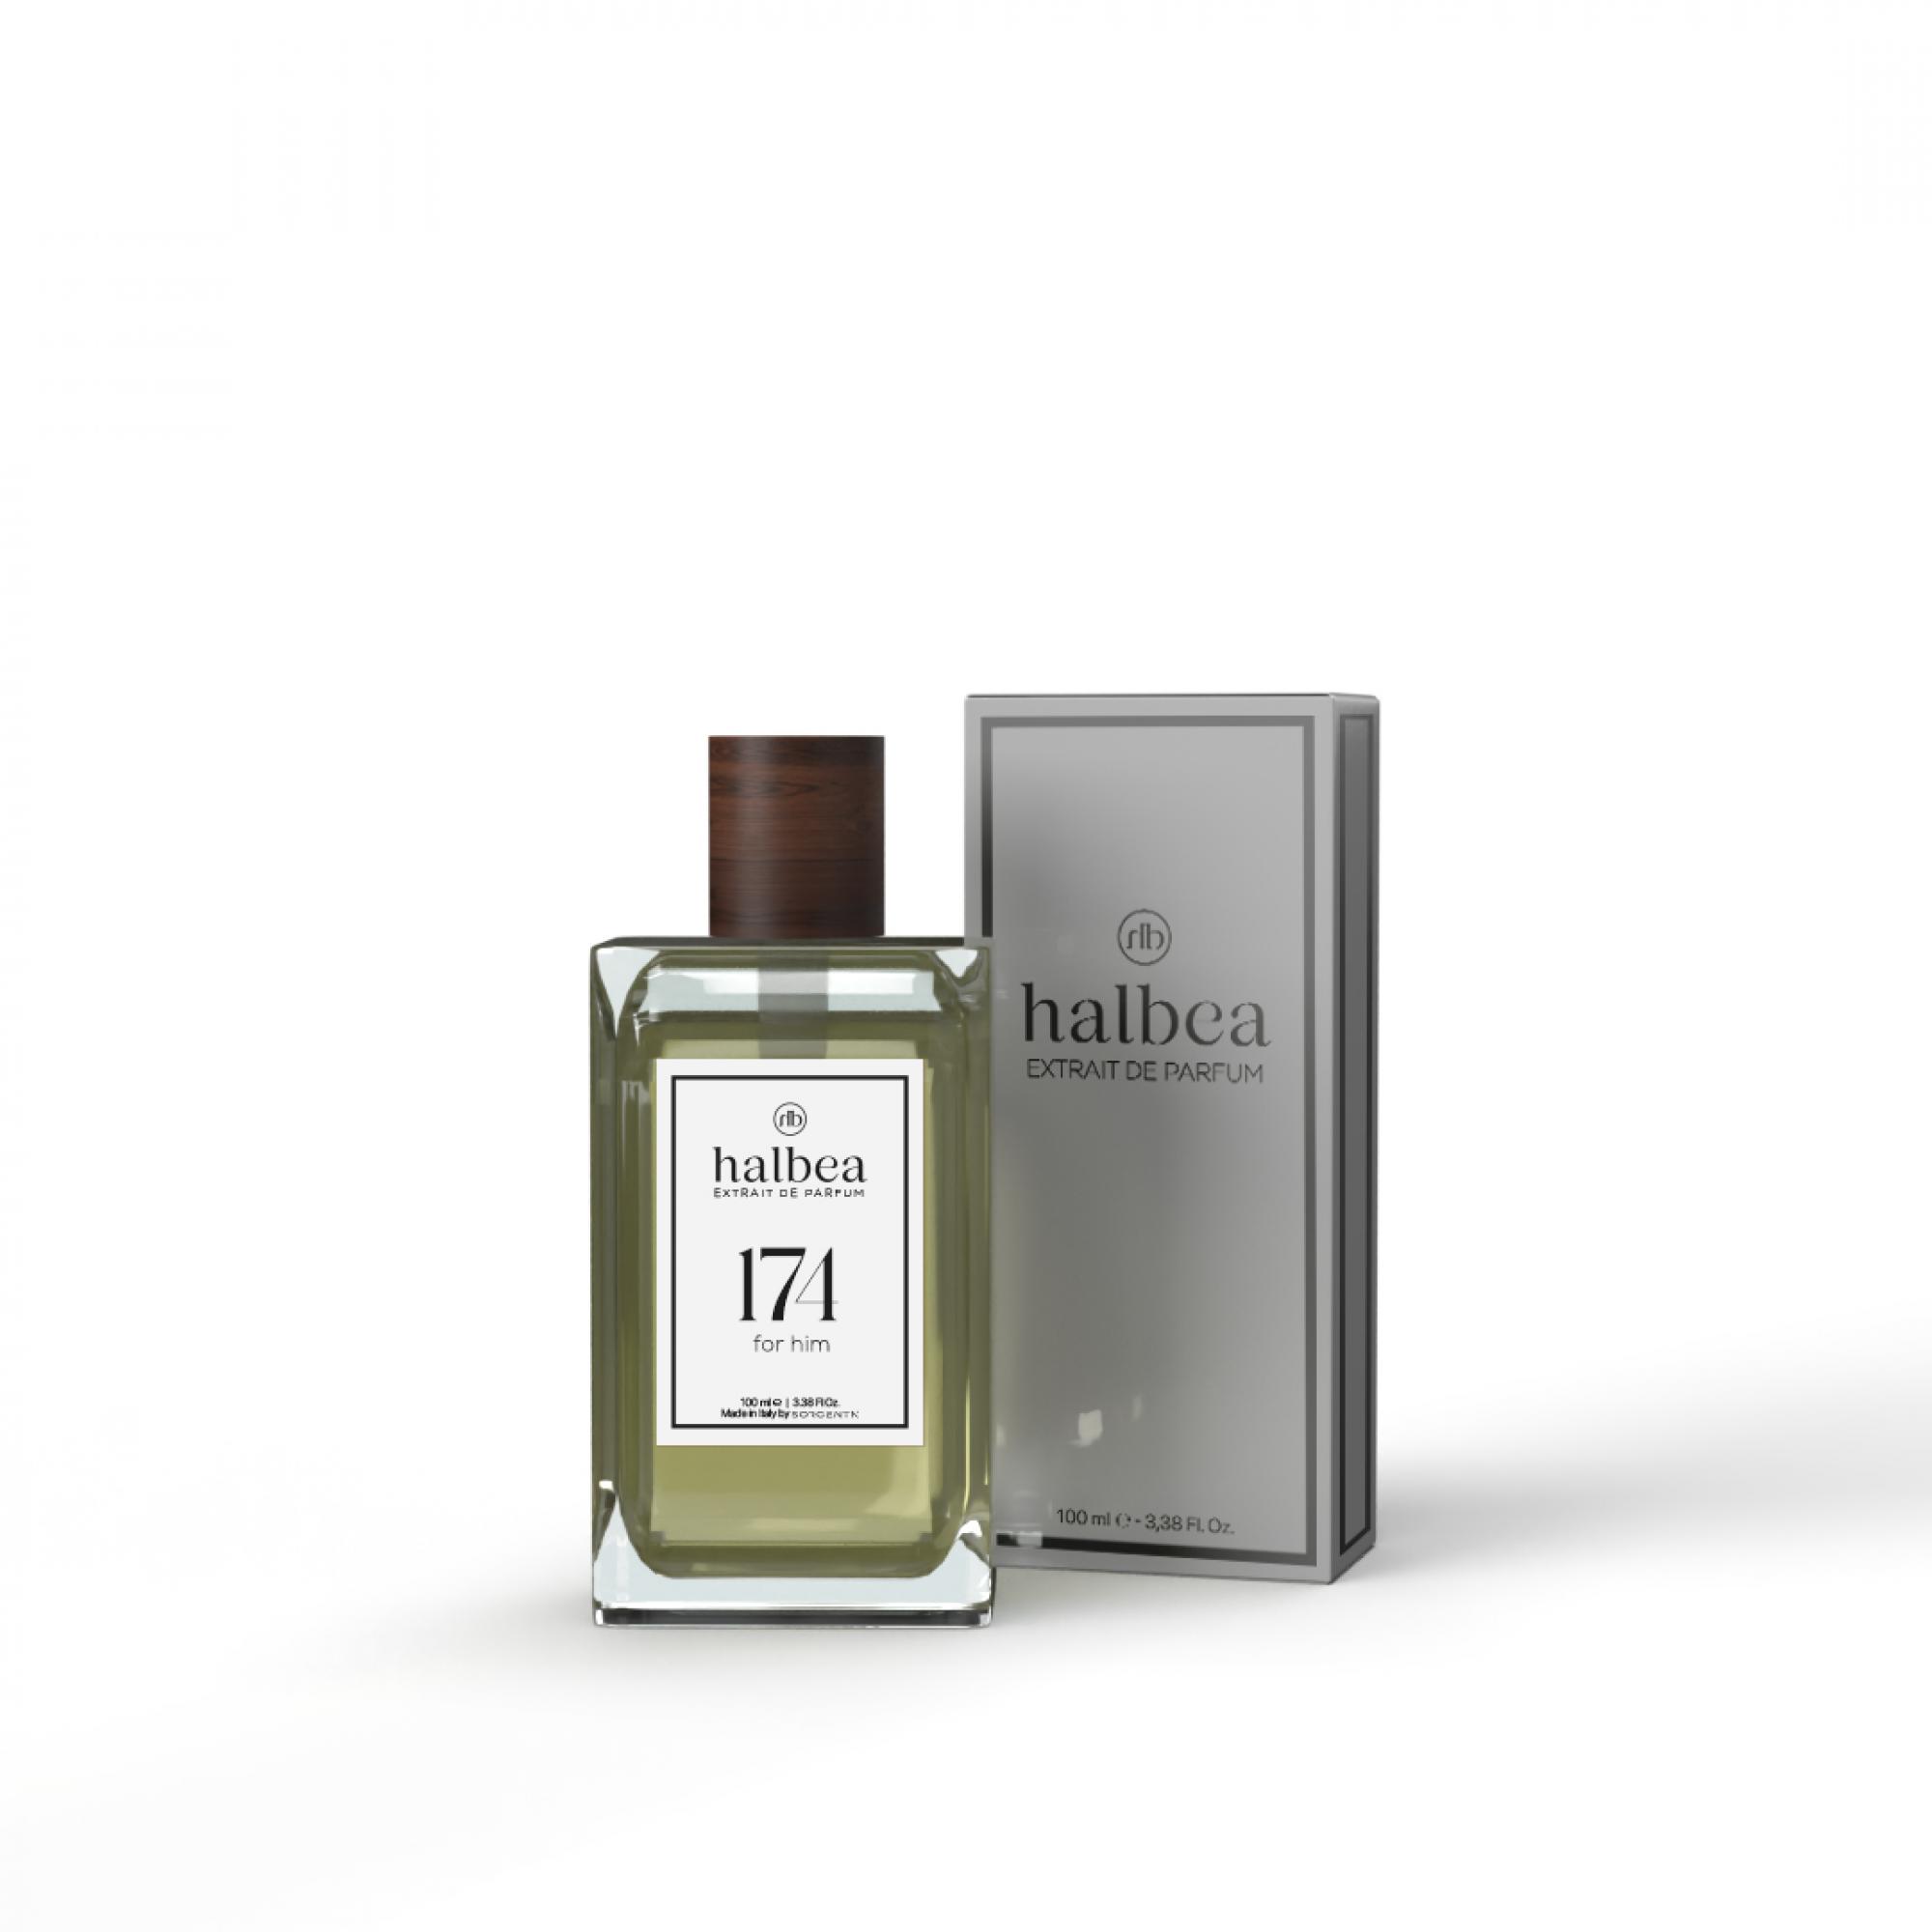 Halbea Parfum Nr. 174 insp. by Burberry Mr. Burberry Sorgenta Duftzwilling 100ml